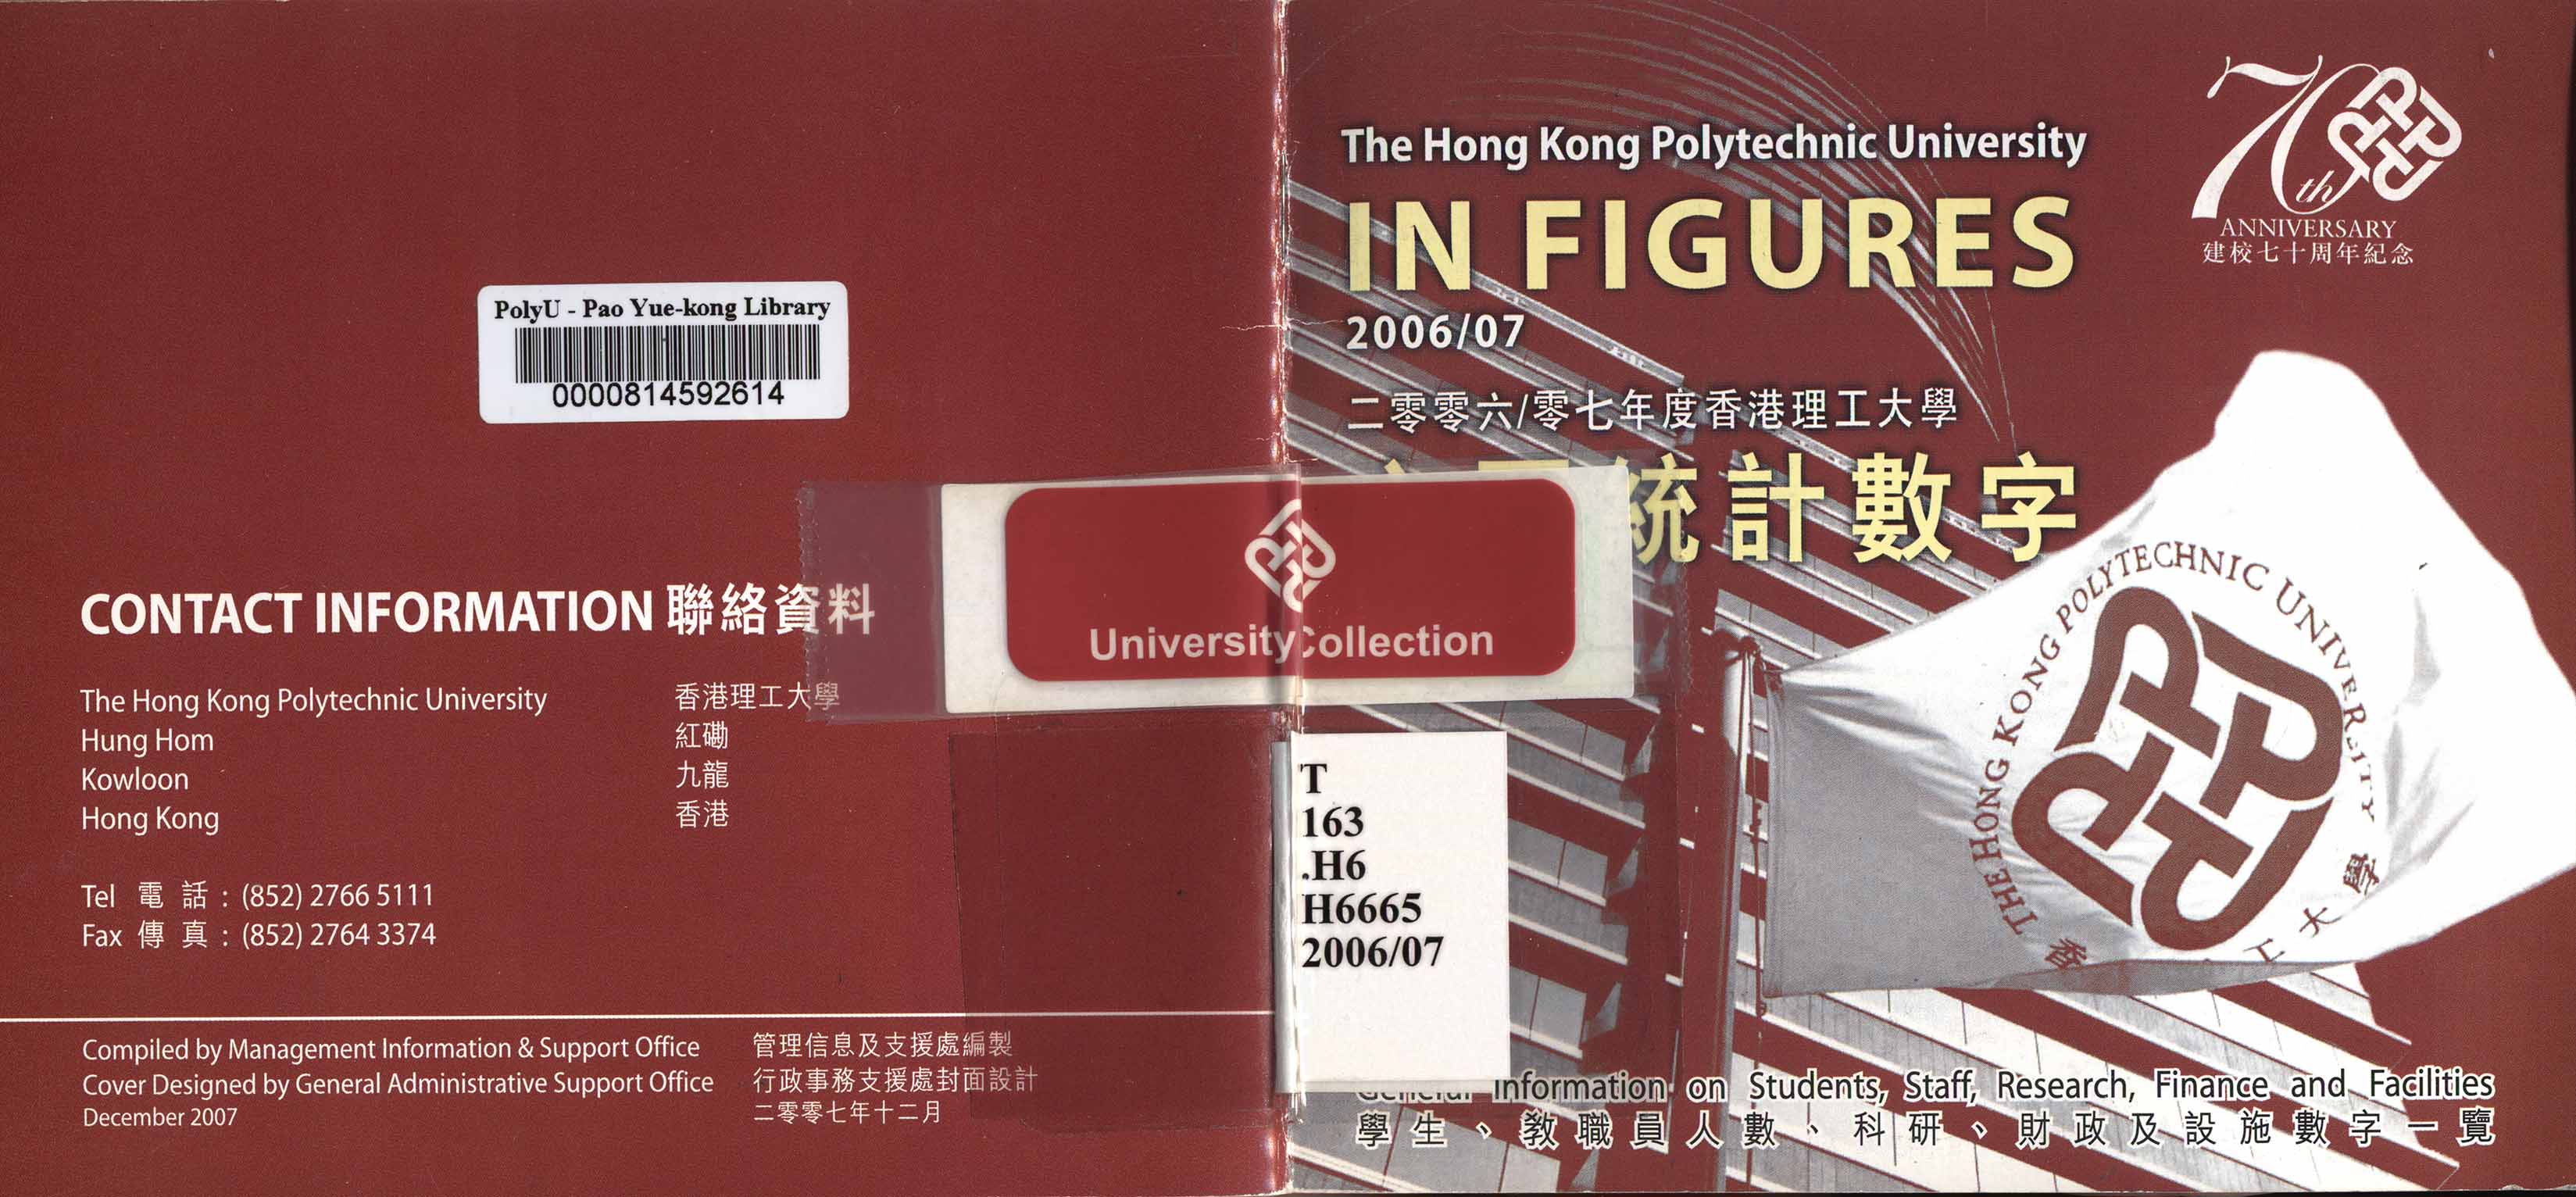 The Hong Kong Polytechnic University in figures 2006/07